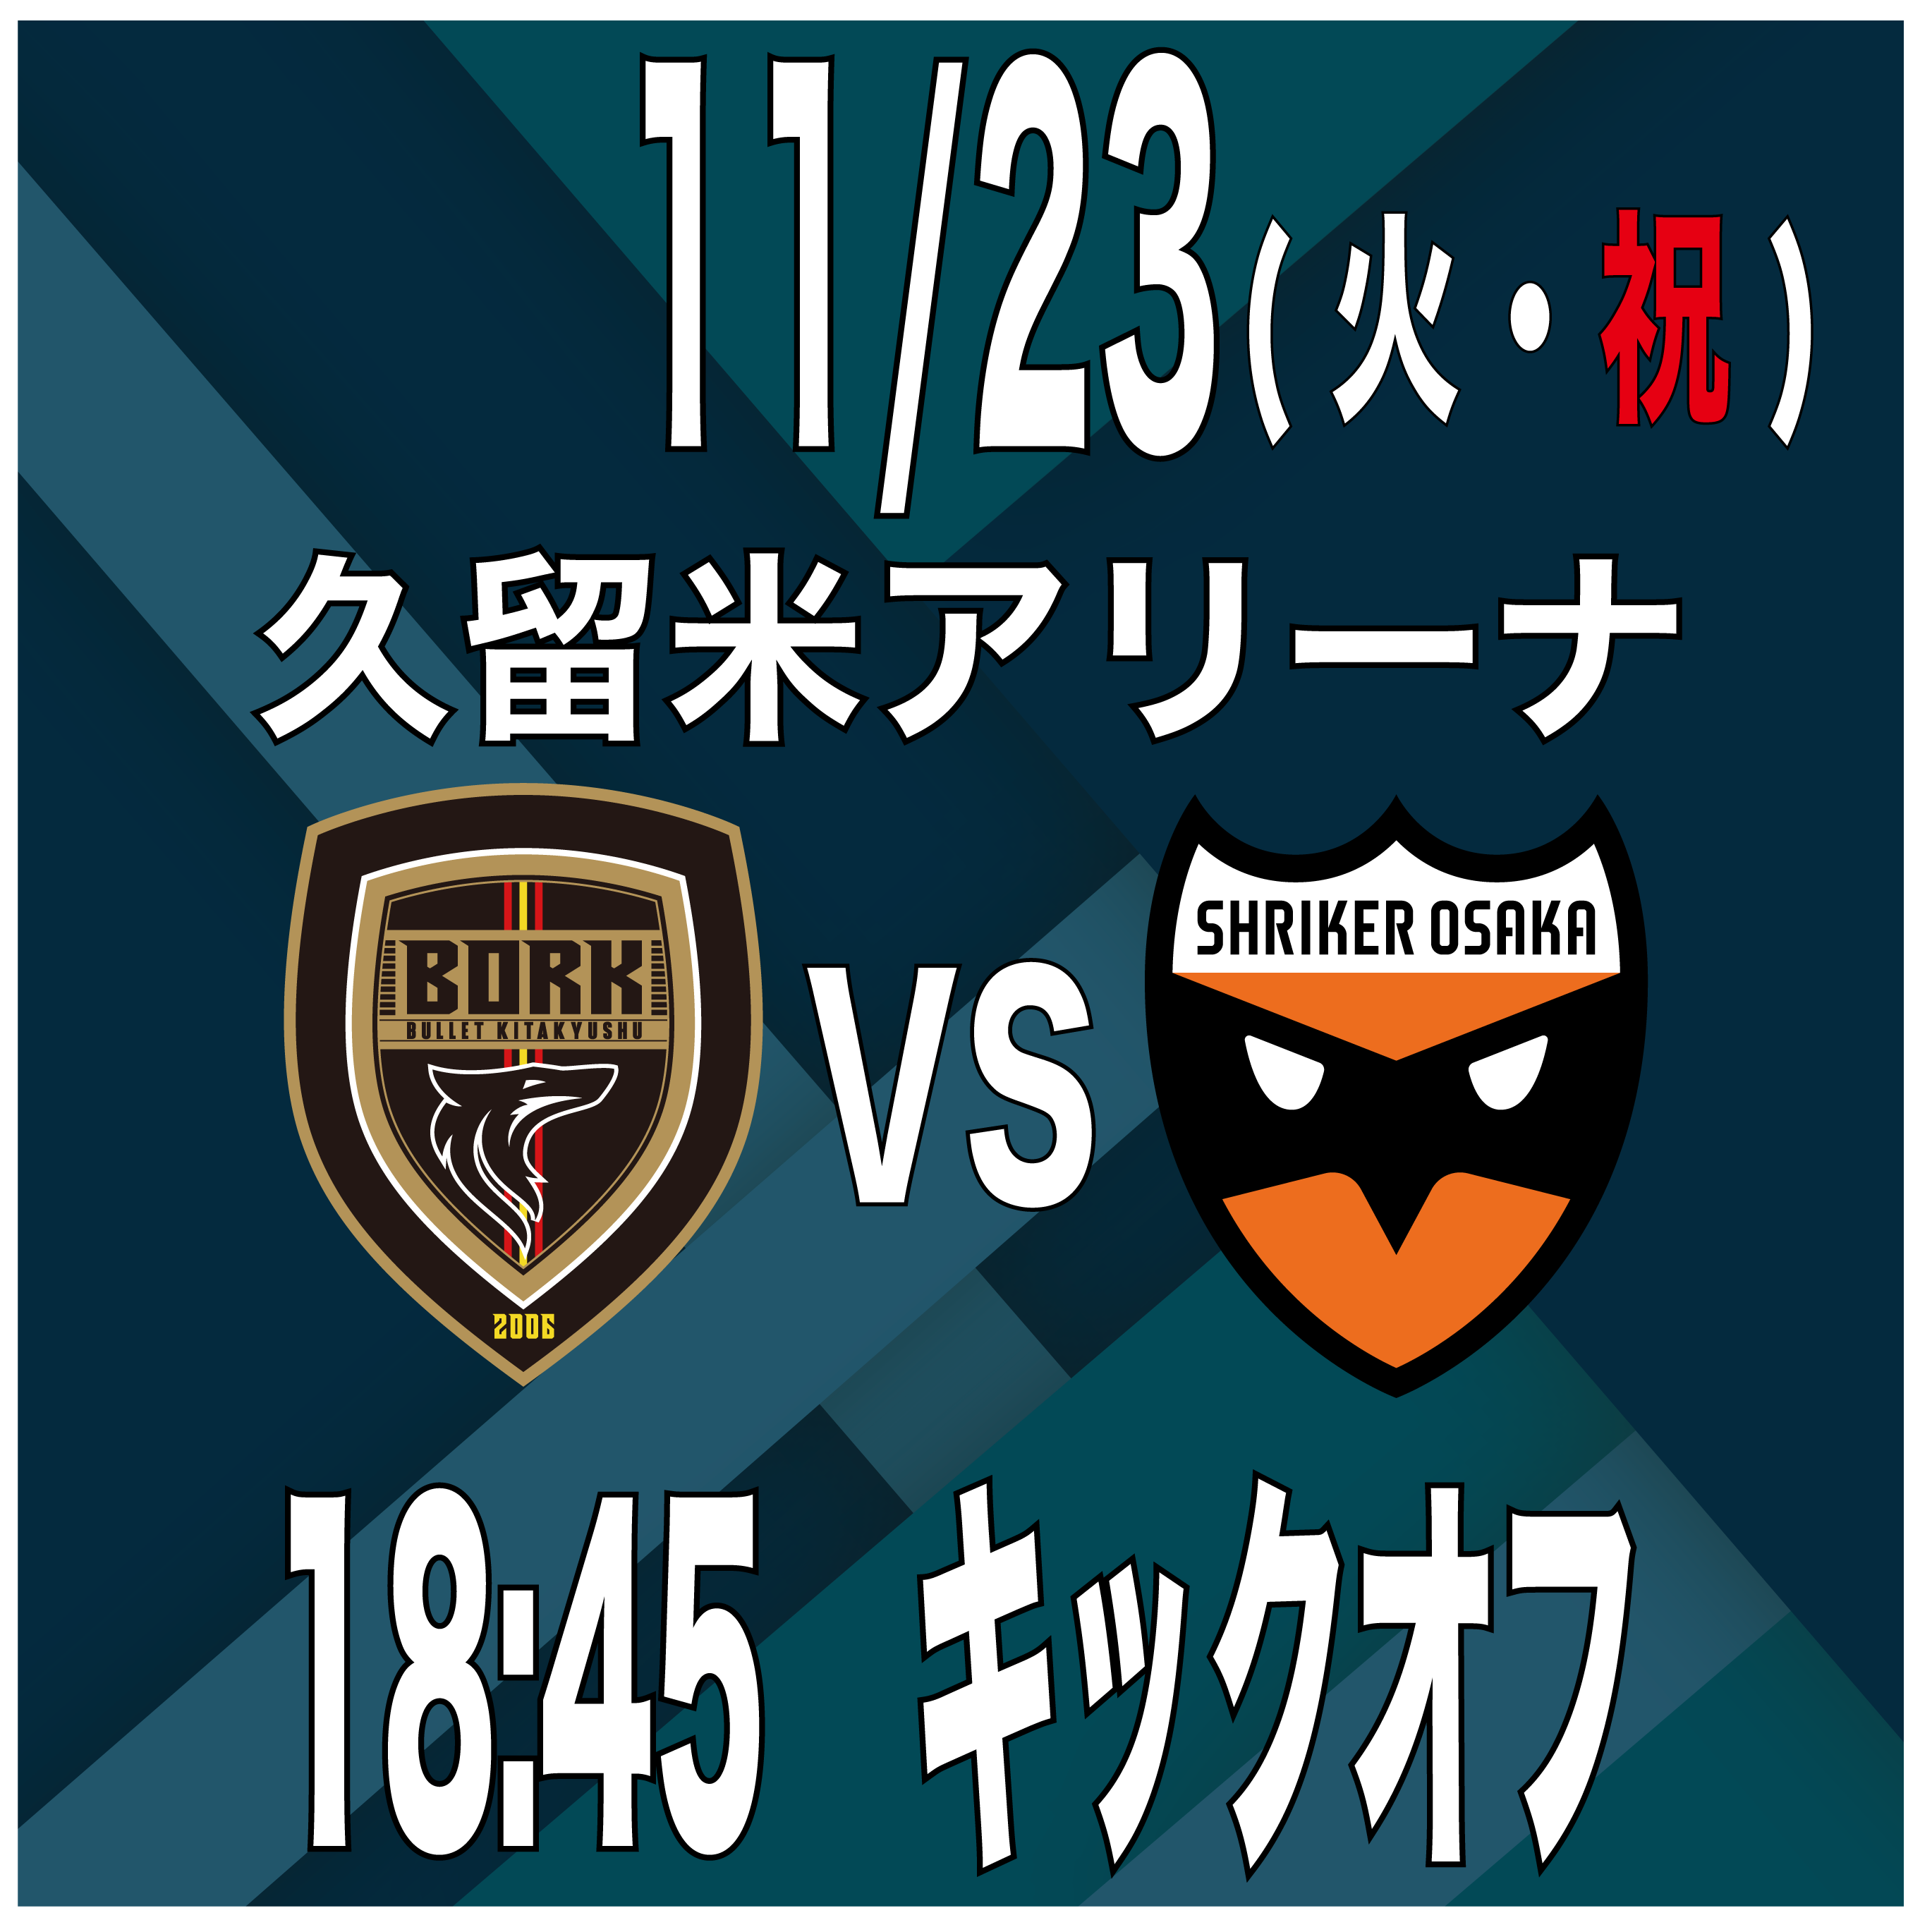 Fリーグ 2021ー2022ディビジョン1 ボルクバレット北九州 vs シュライカー大阪